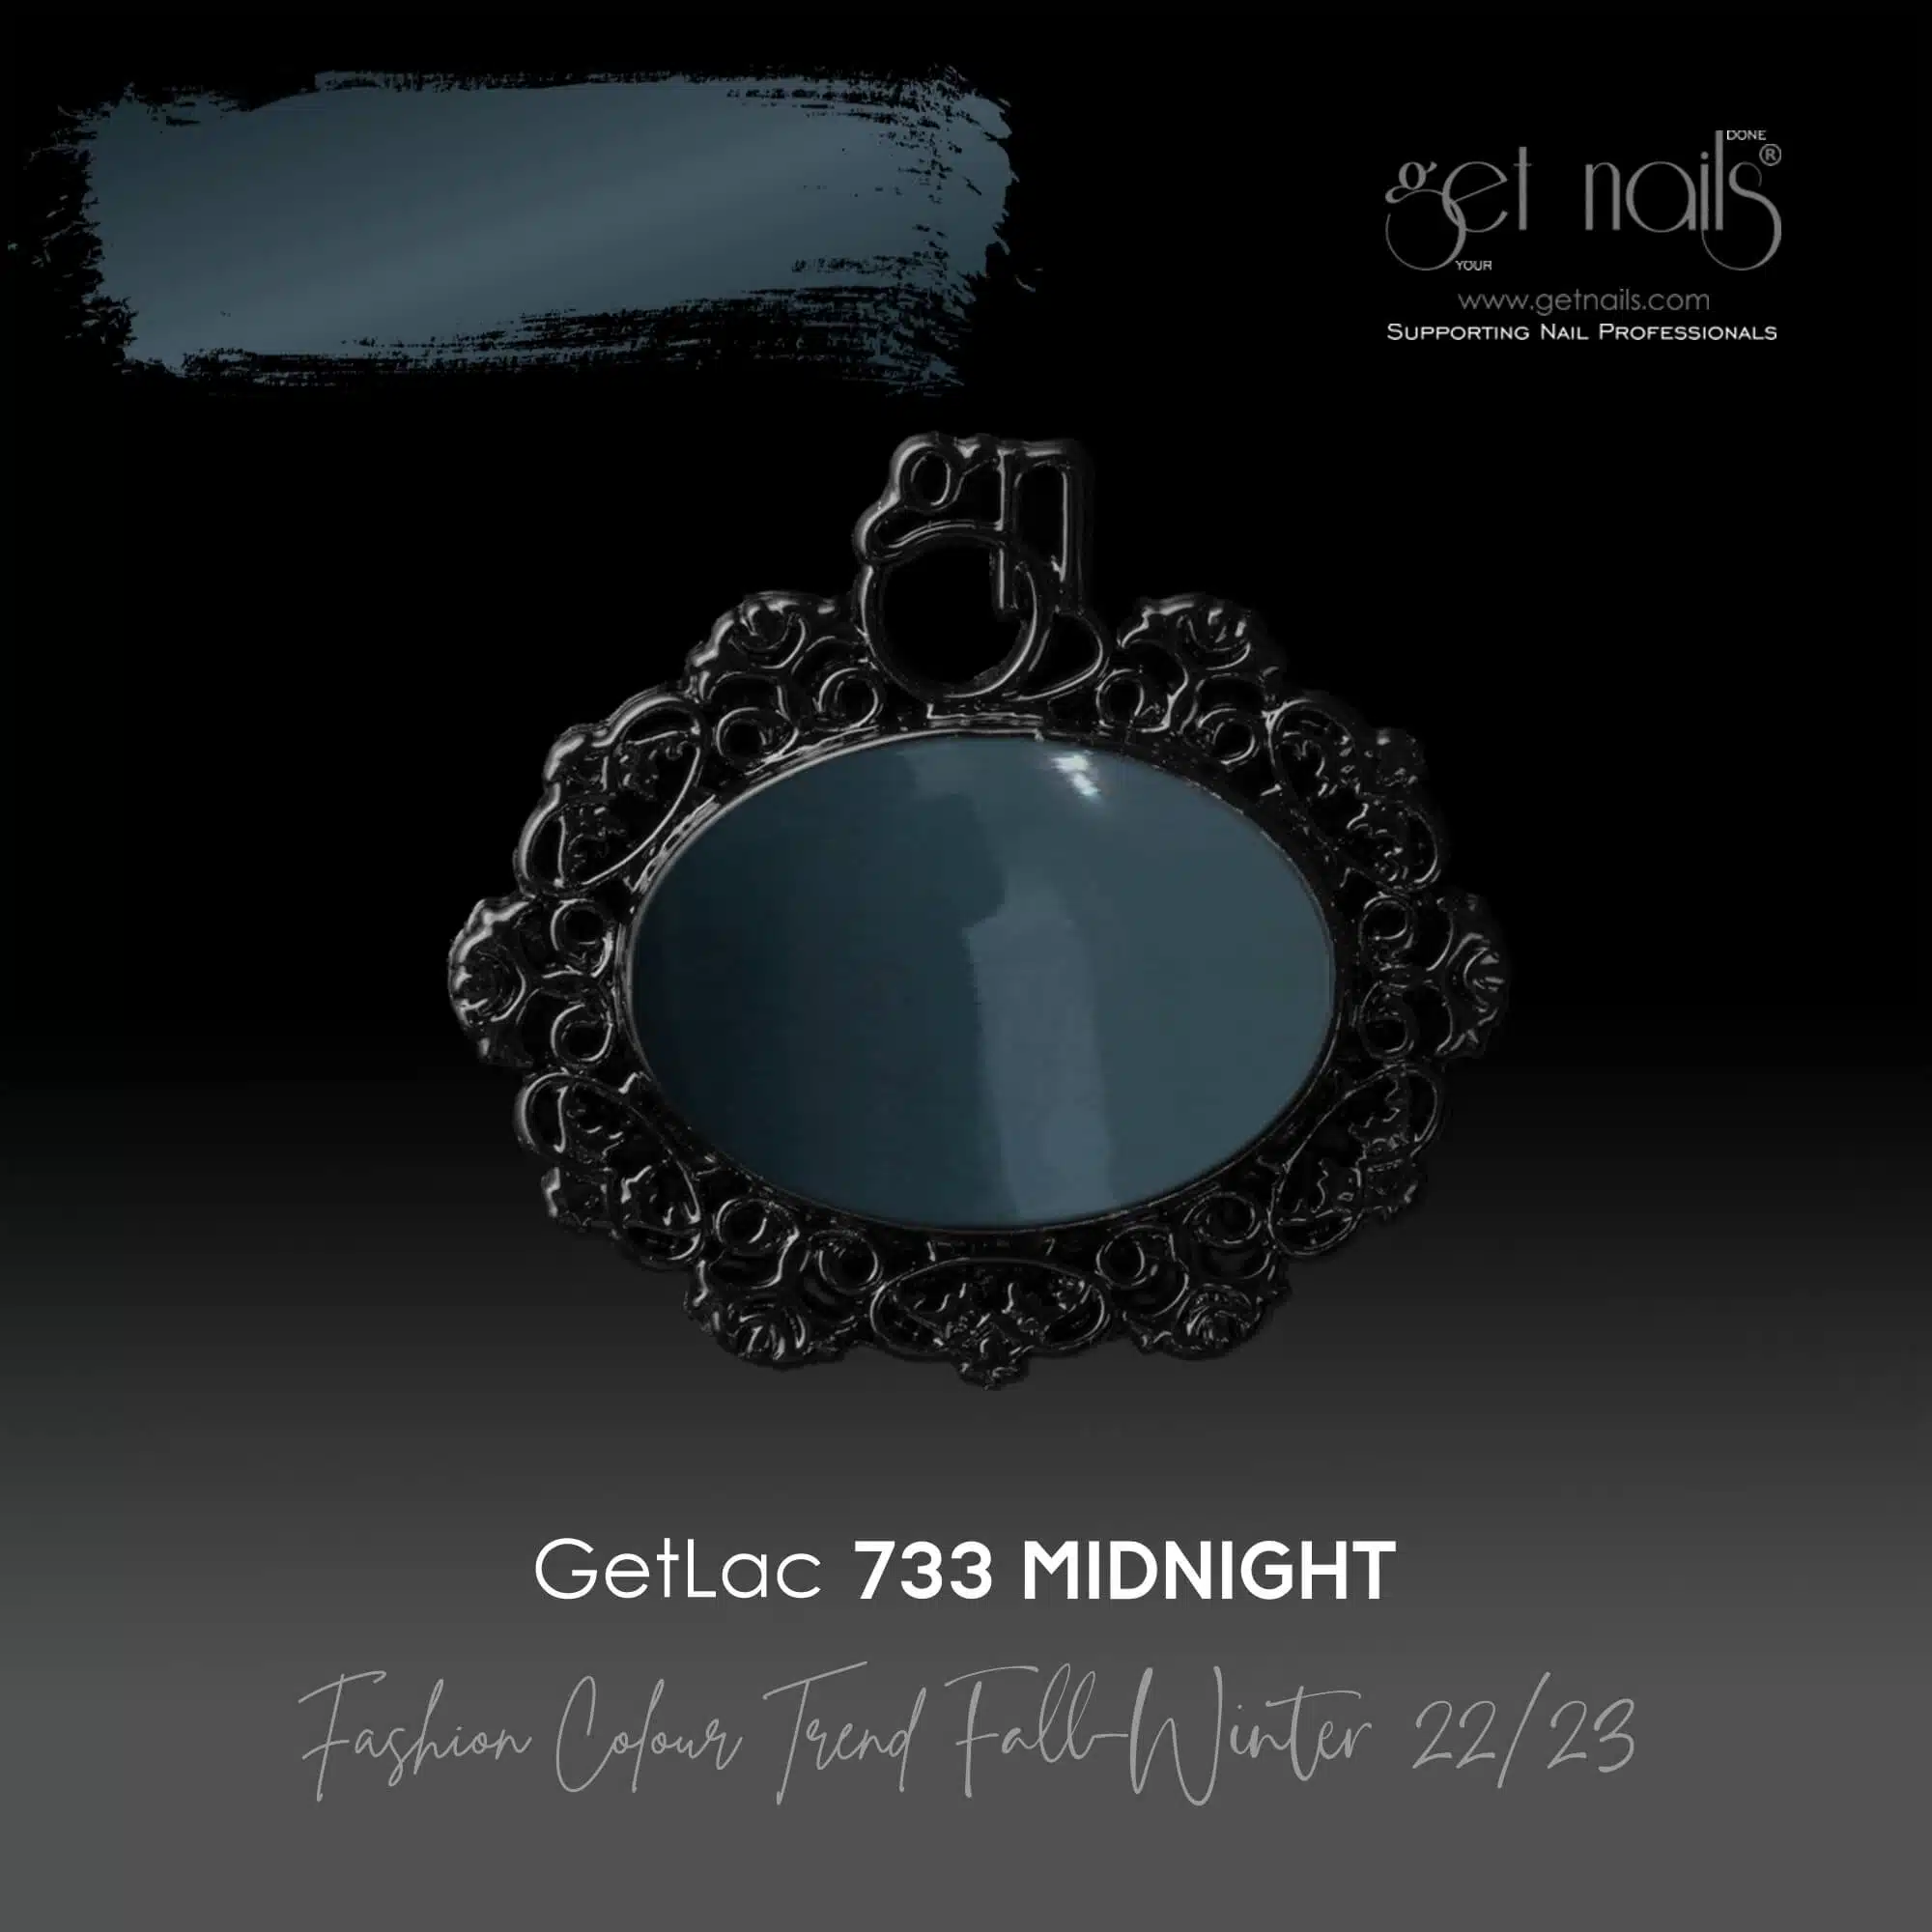 Get Nails Austria - GetLac 733 Полночь 15г